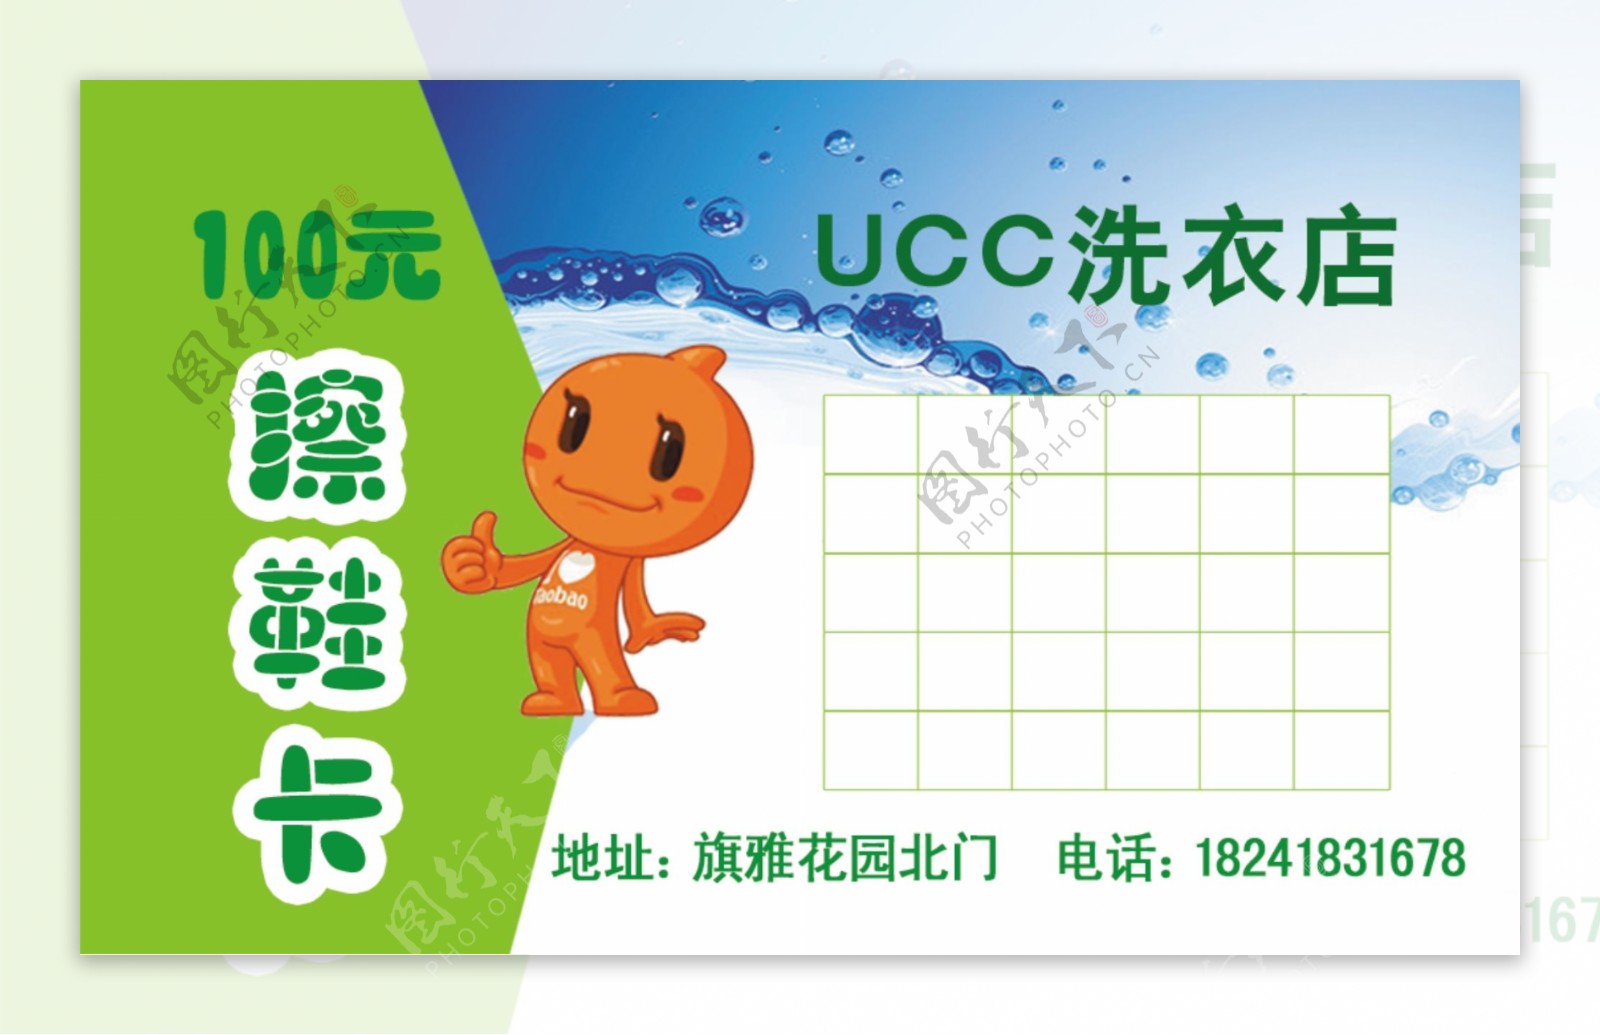 UCC洗衣店名片图片